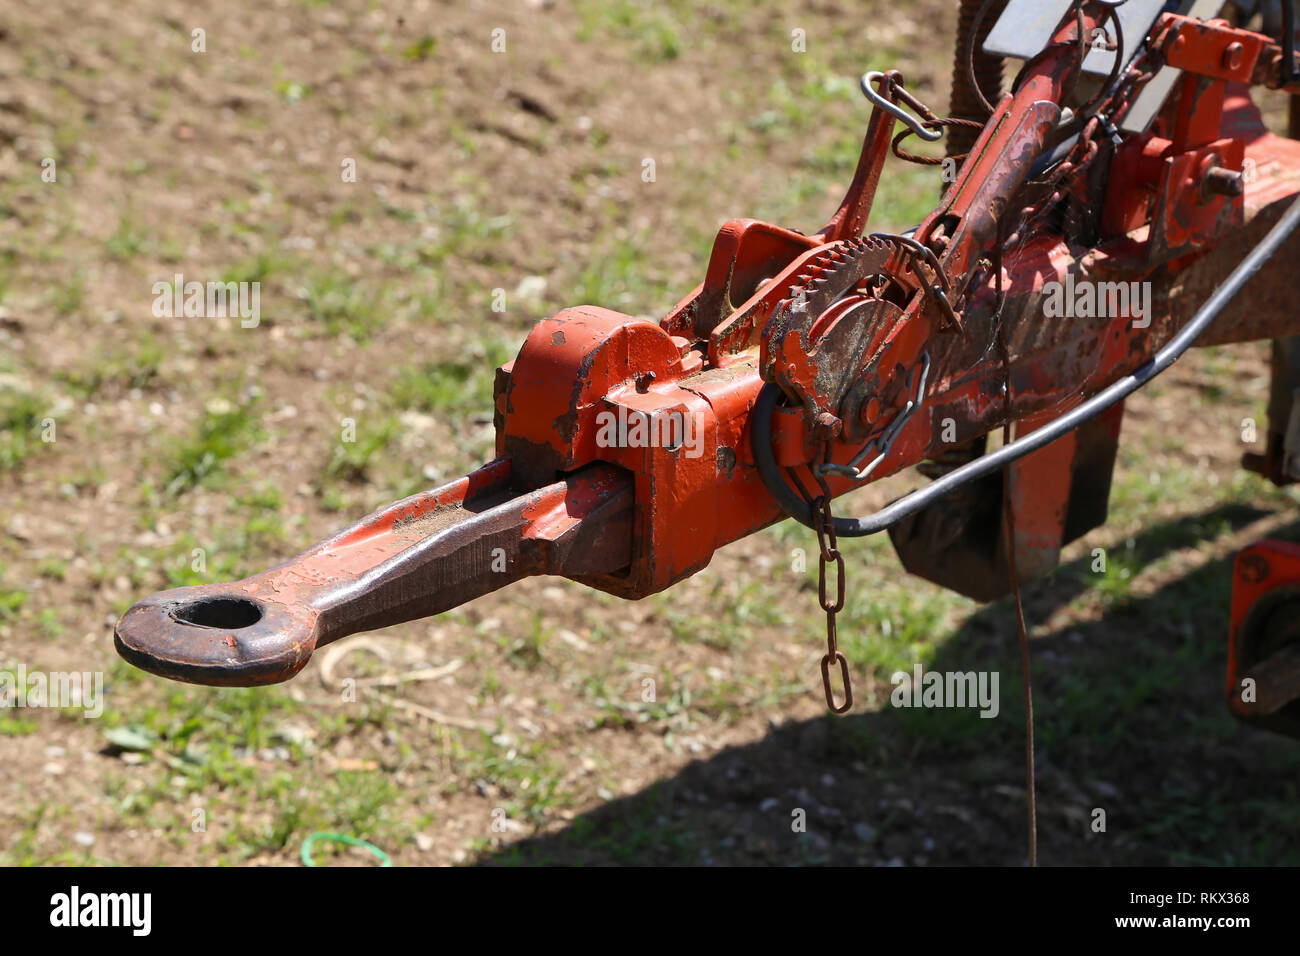 https://c8.alamy.com/comp/RKX368/agricultural-machinery-tractor-hook-details-agricultural-machinery-tractor-hook-RKX368.jpg